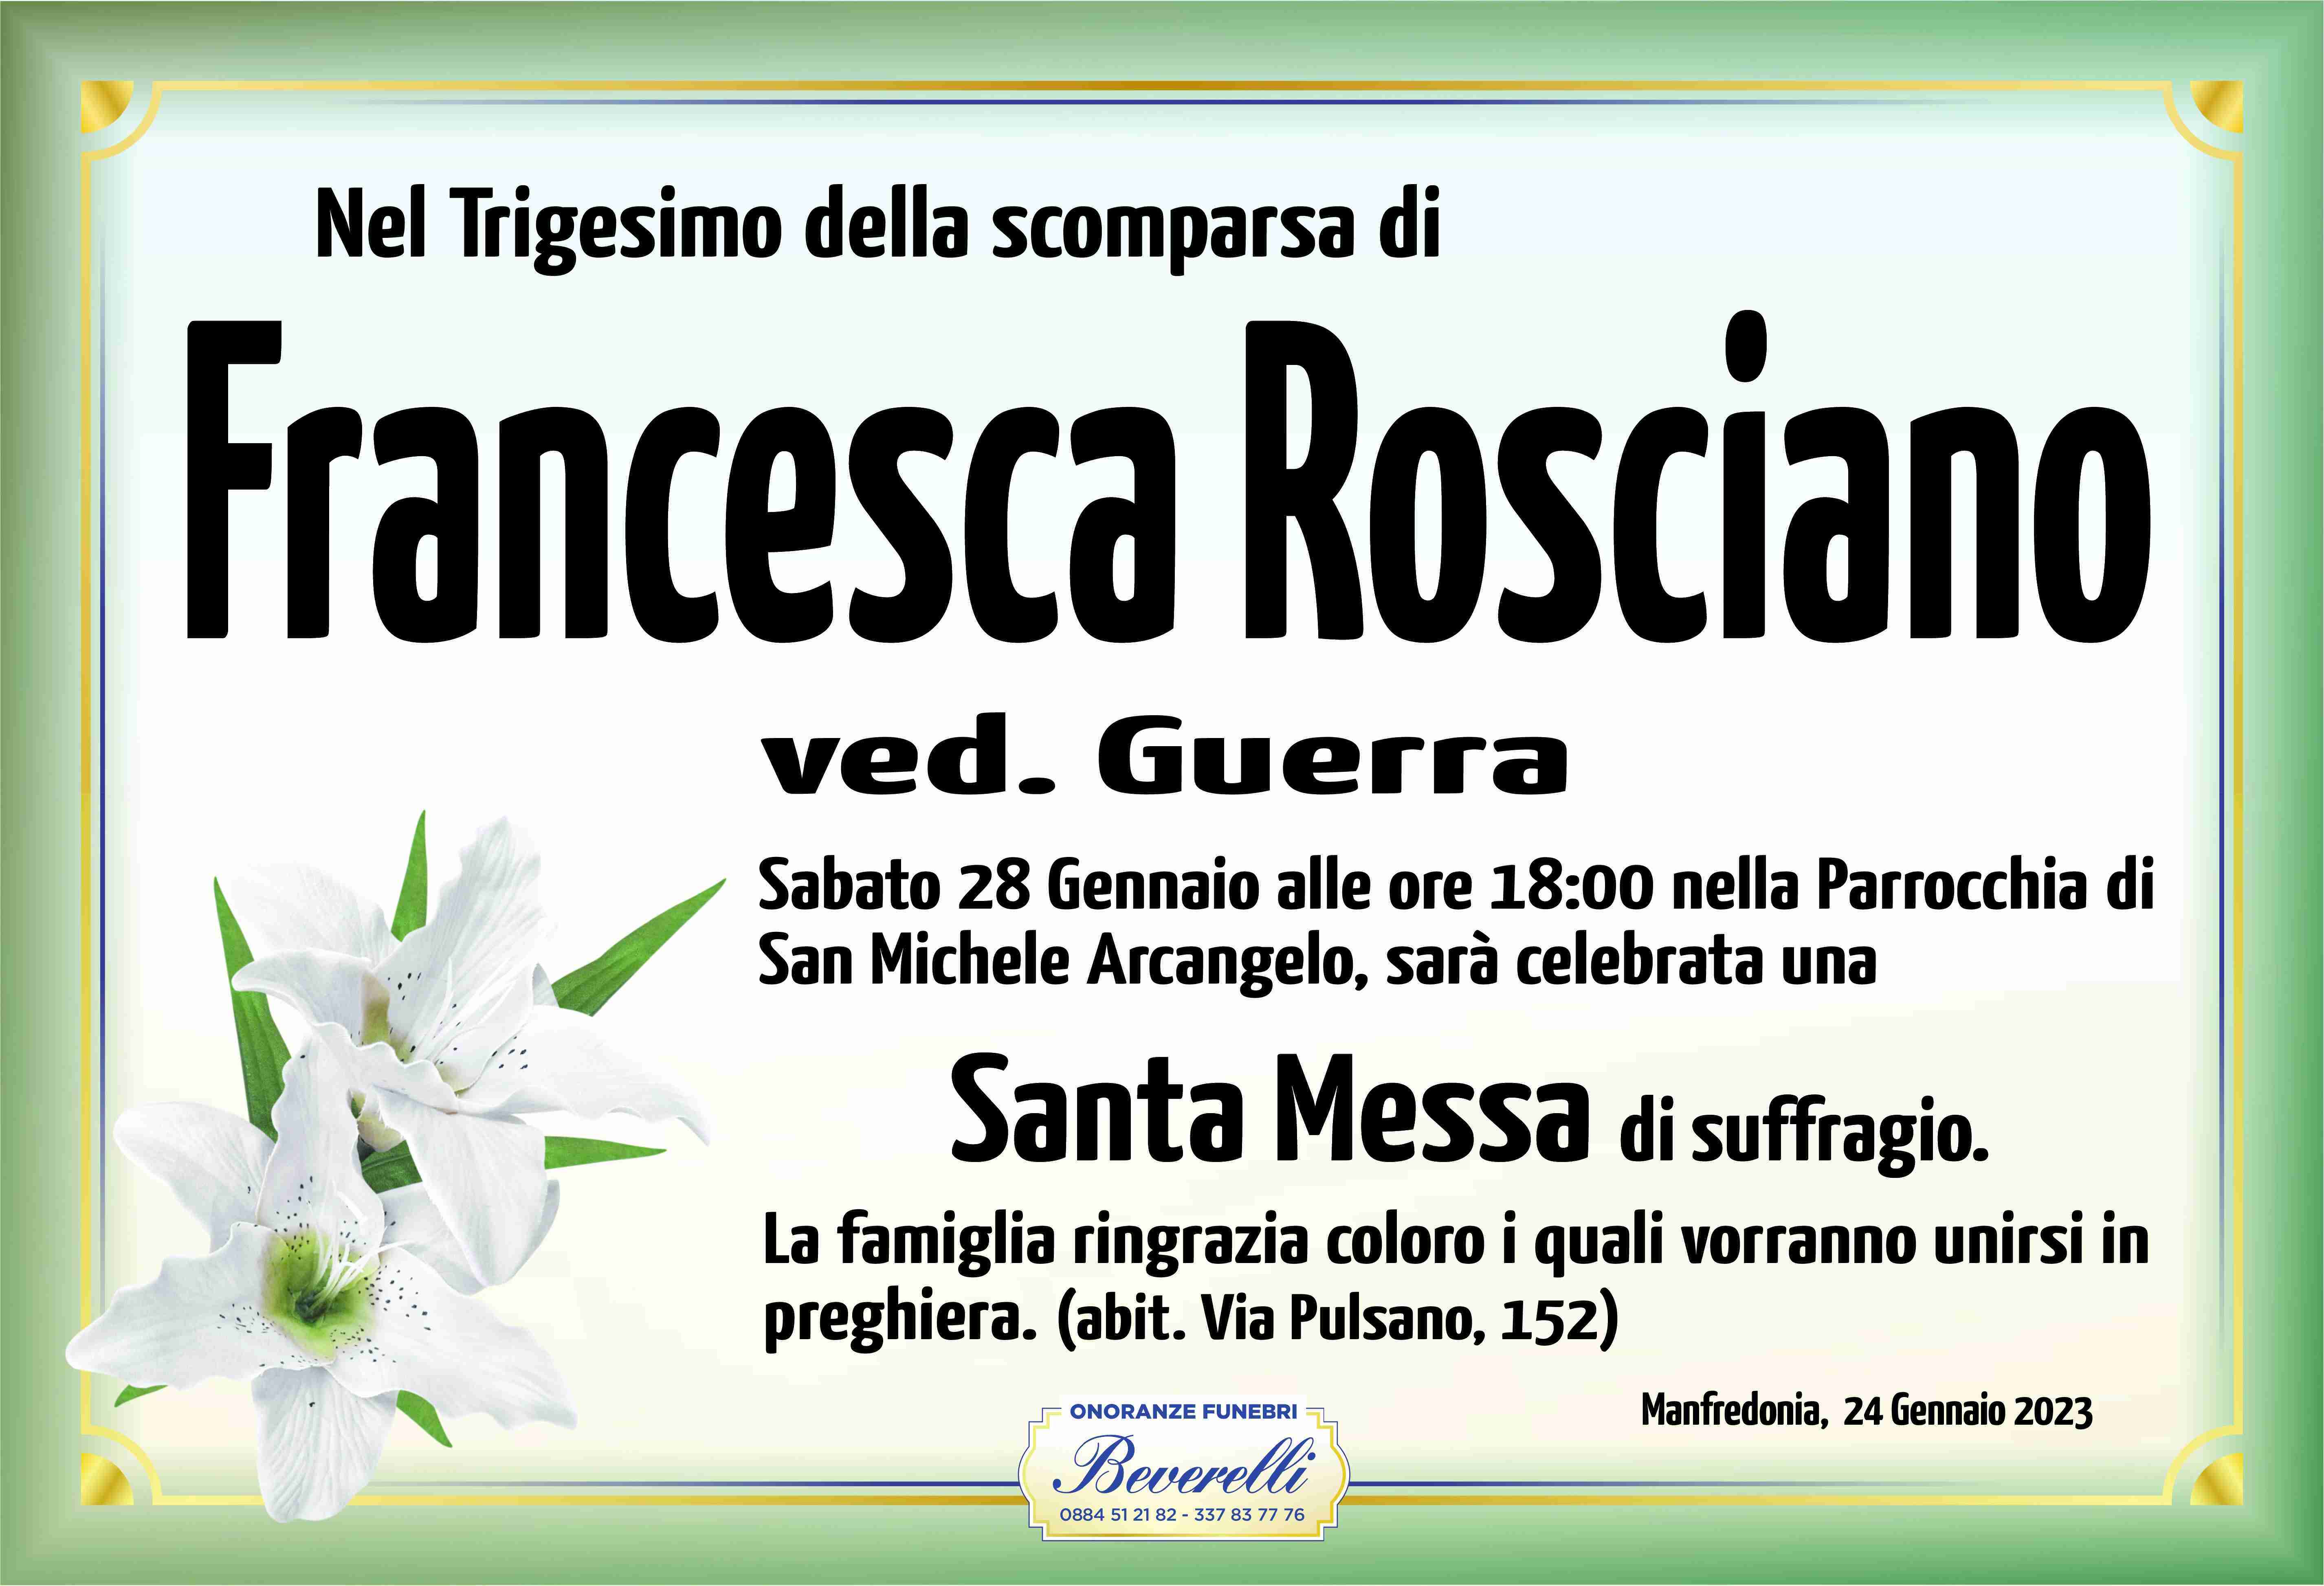 Francesca Rosciano